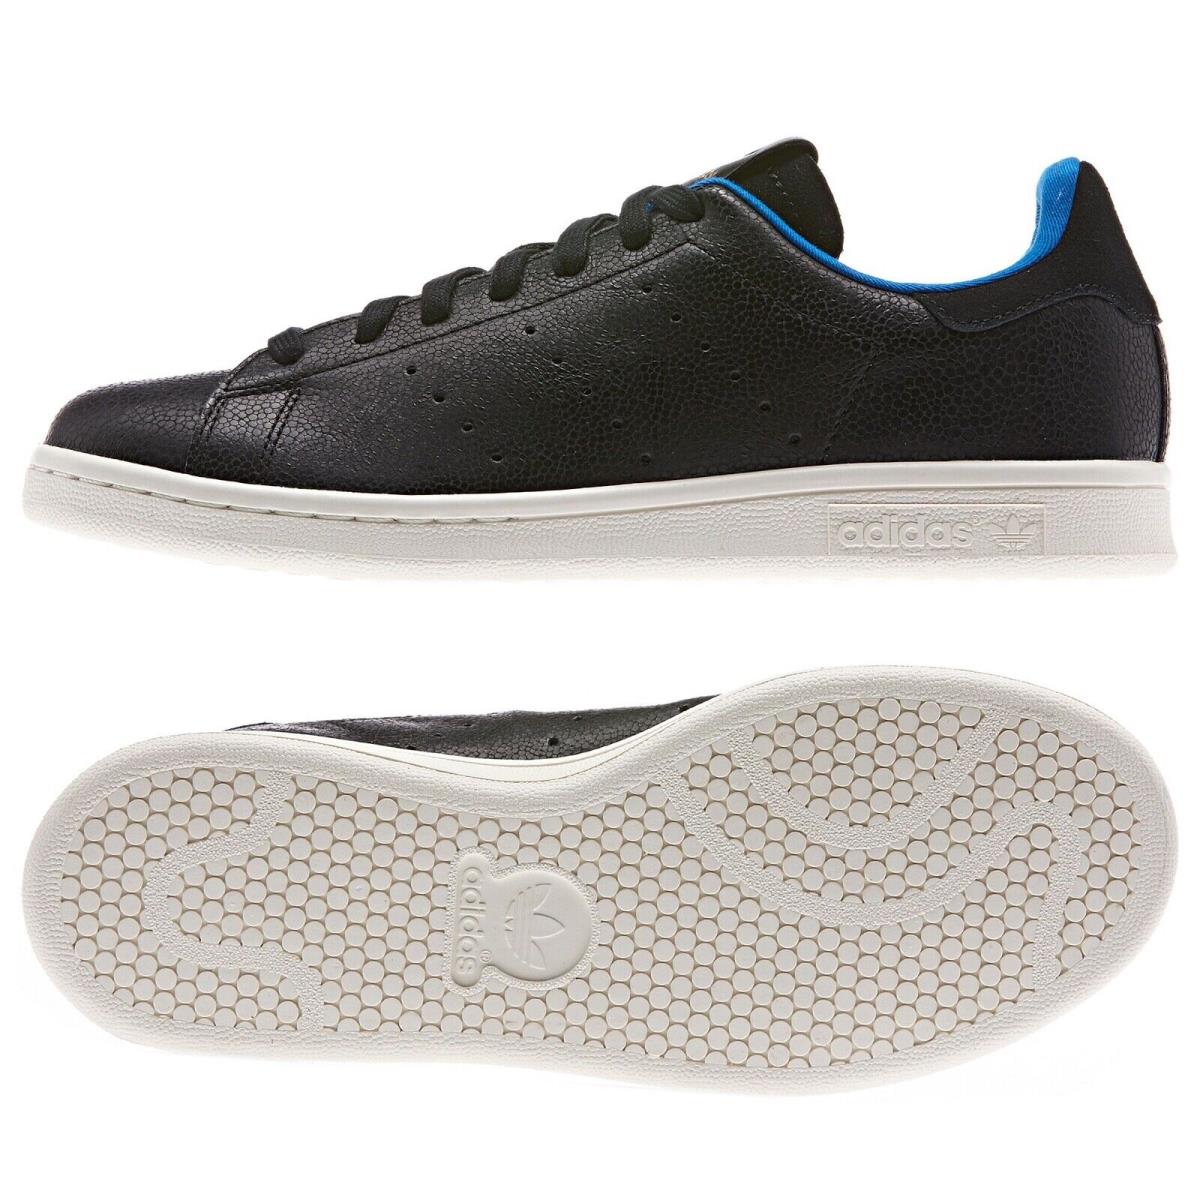 Adidas Originals Stan Smith Shark W Black Leather Sharkskin D65899 Women`s Shoes